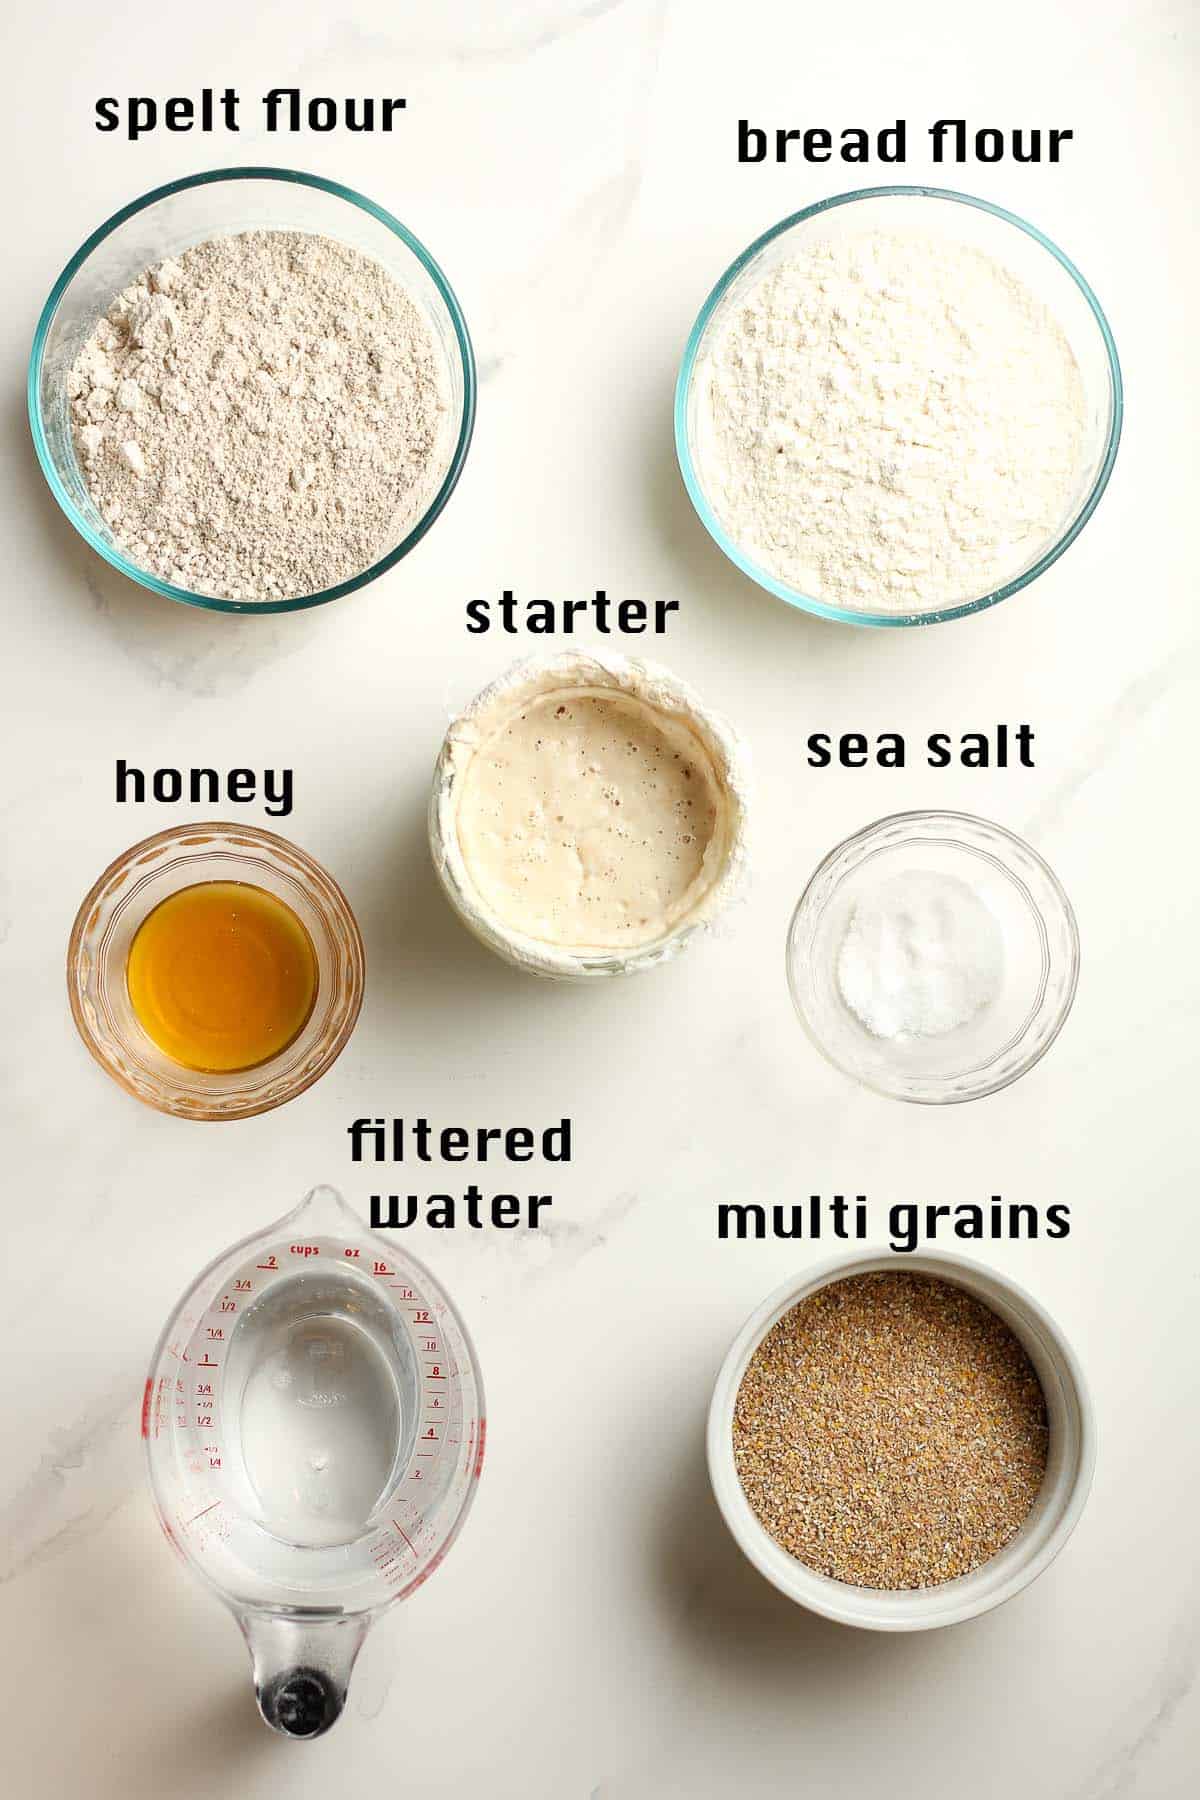 The ingredients for multigrain sourdough bread.